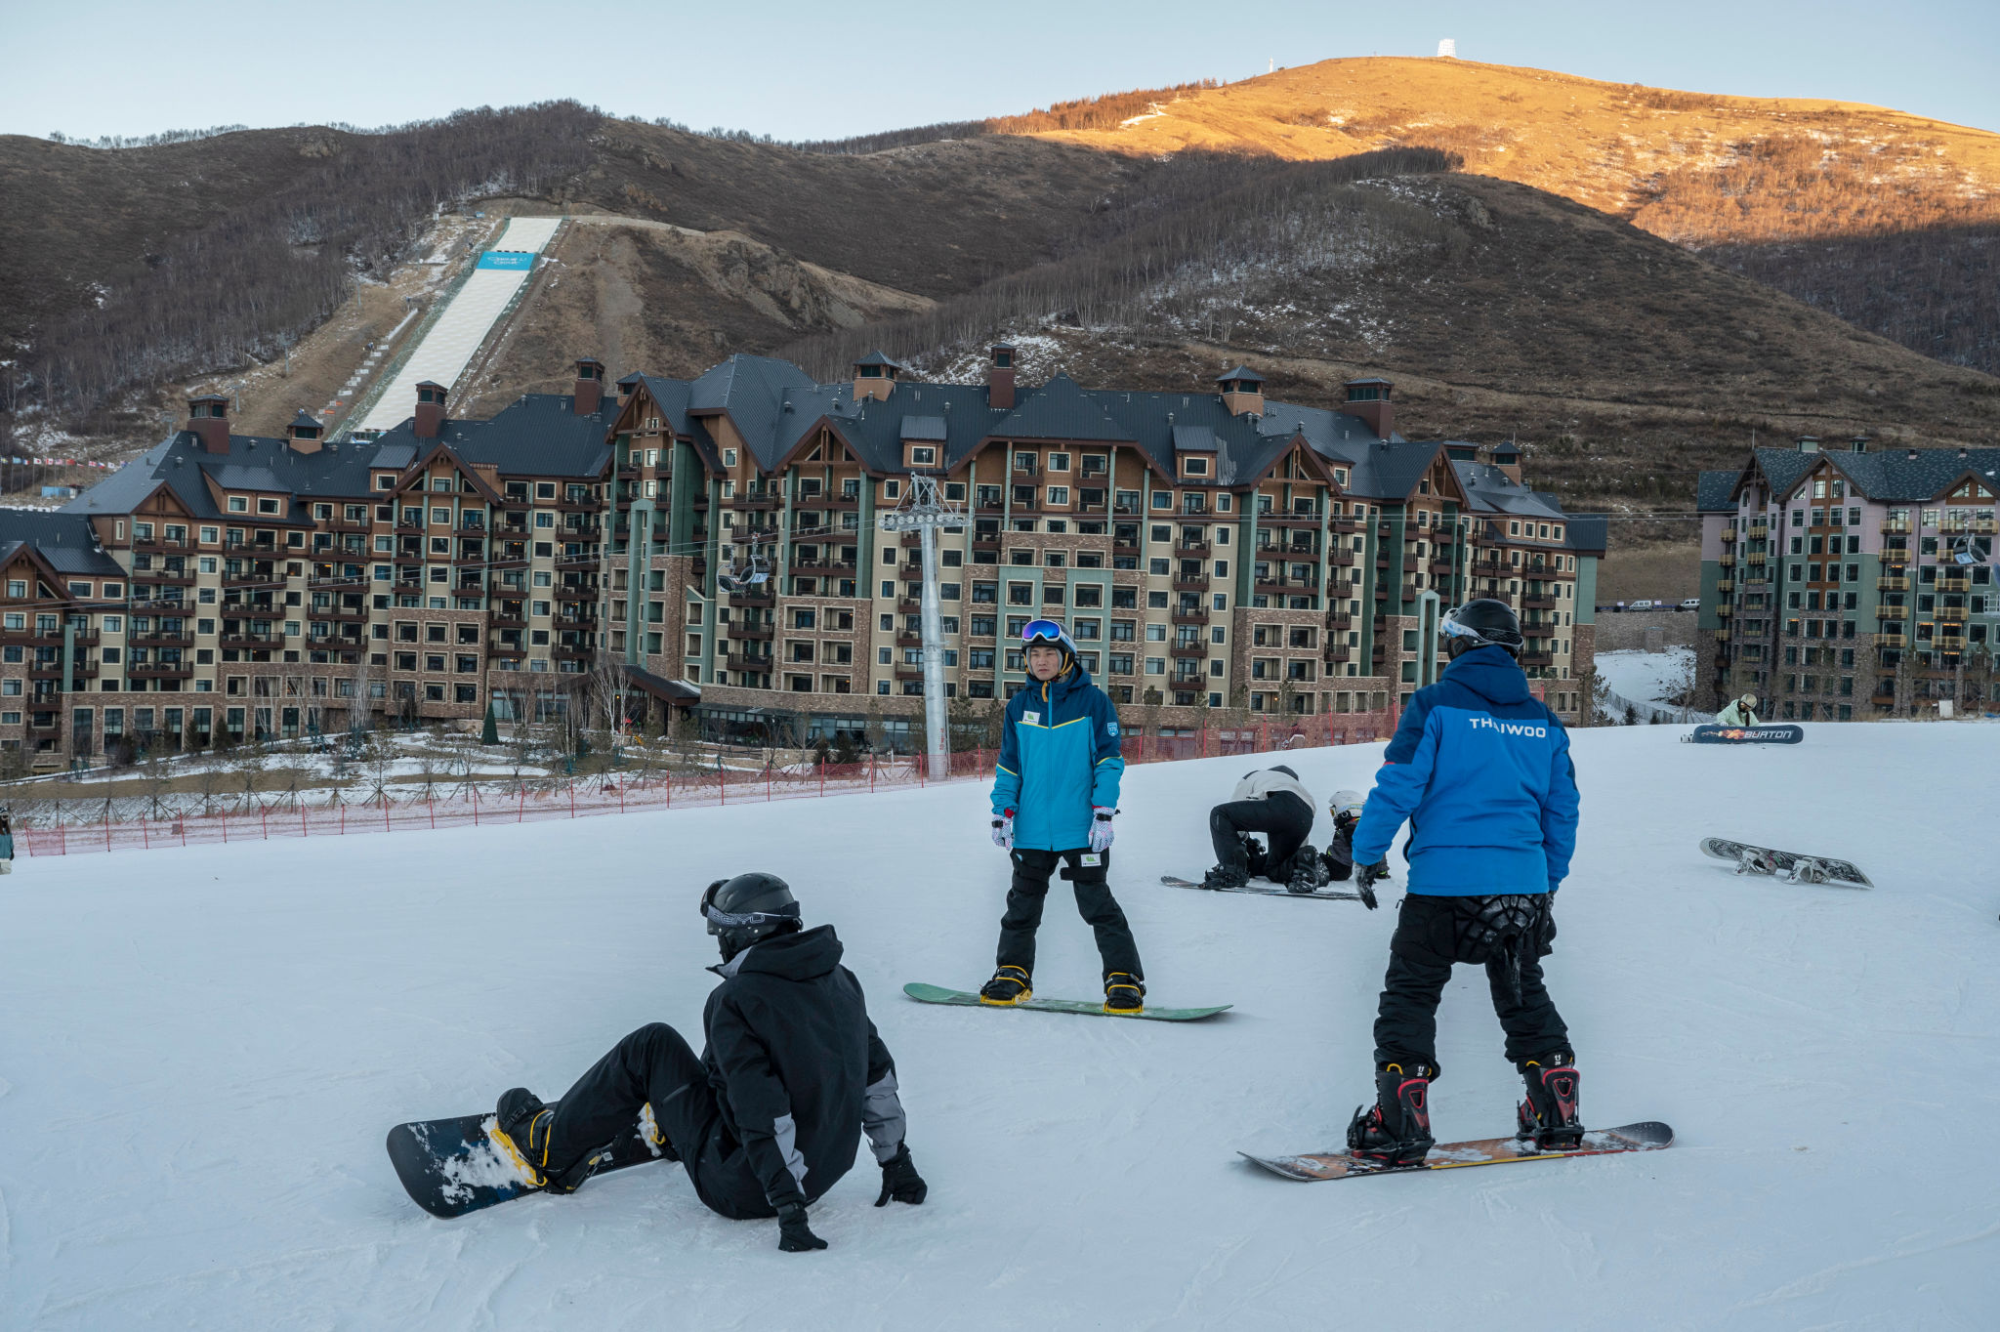 Snowboarders practice in the beginner's area at Thaiwoo Ski Resort in Zhangjiakou, China in December.